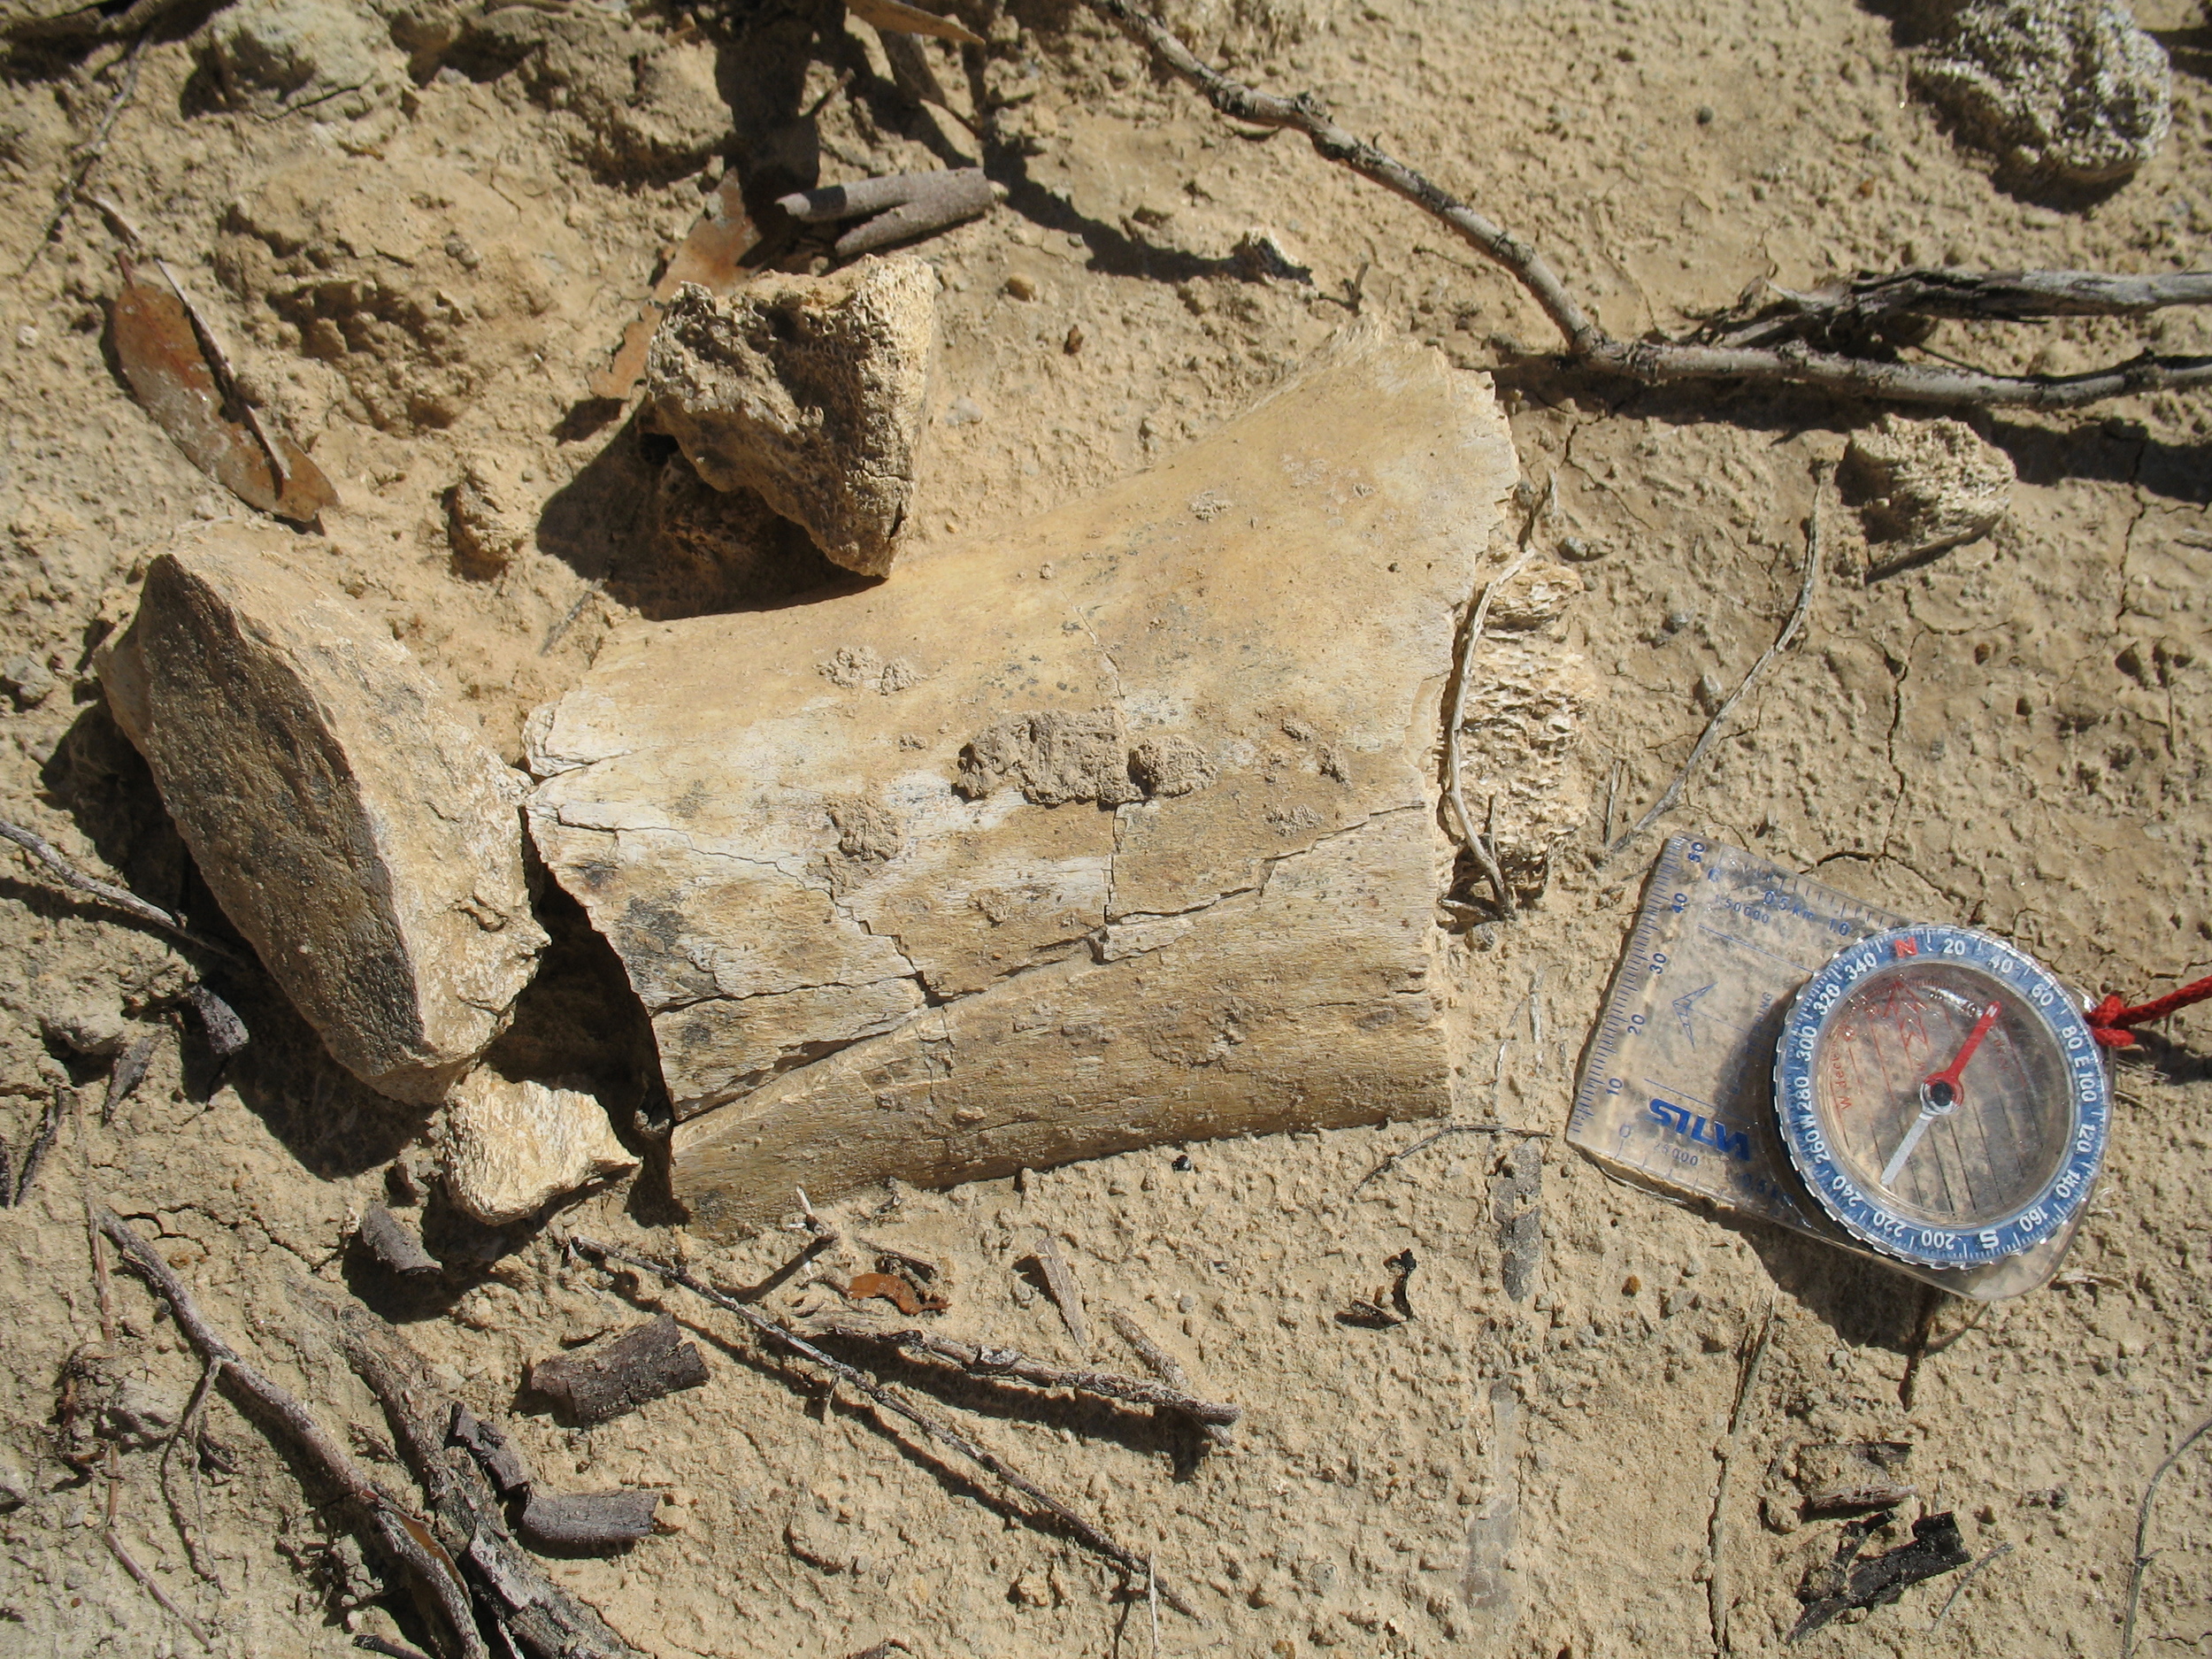 Megafauna fossil.